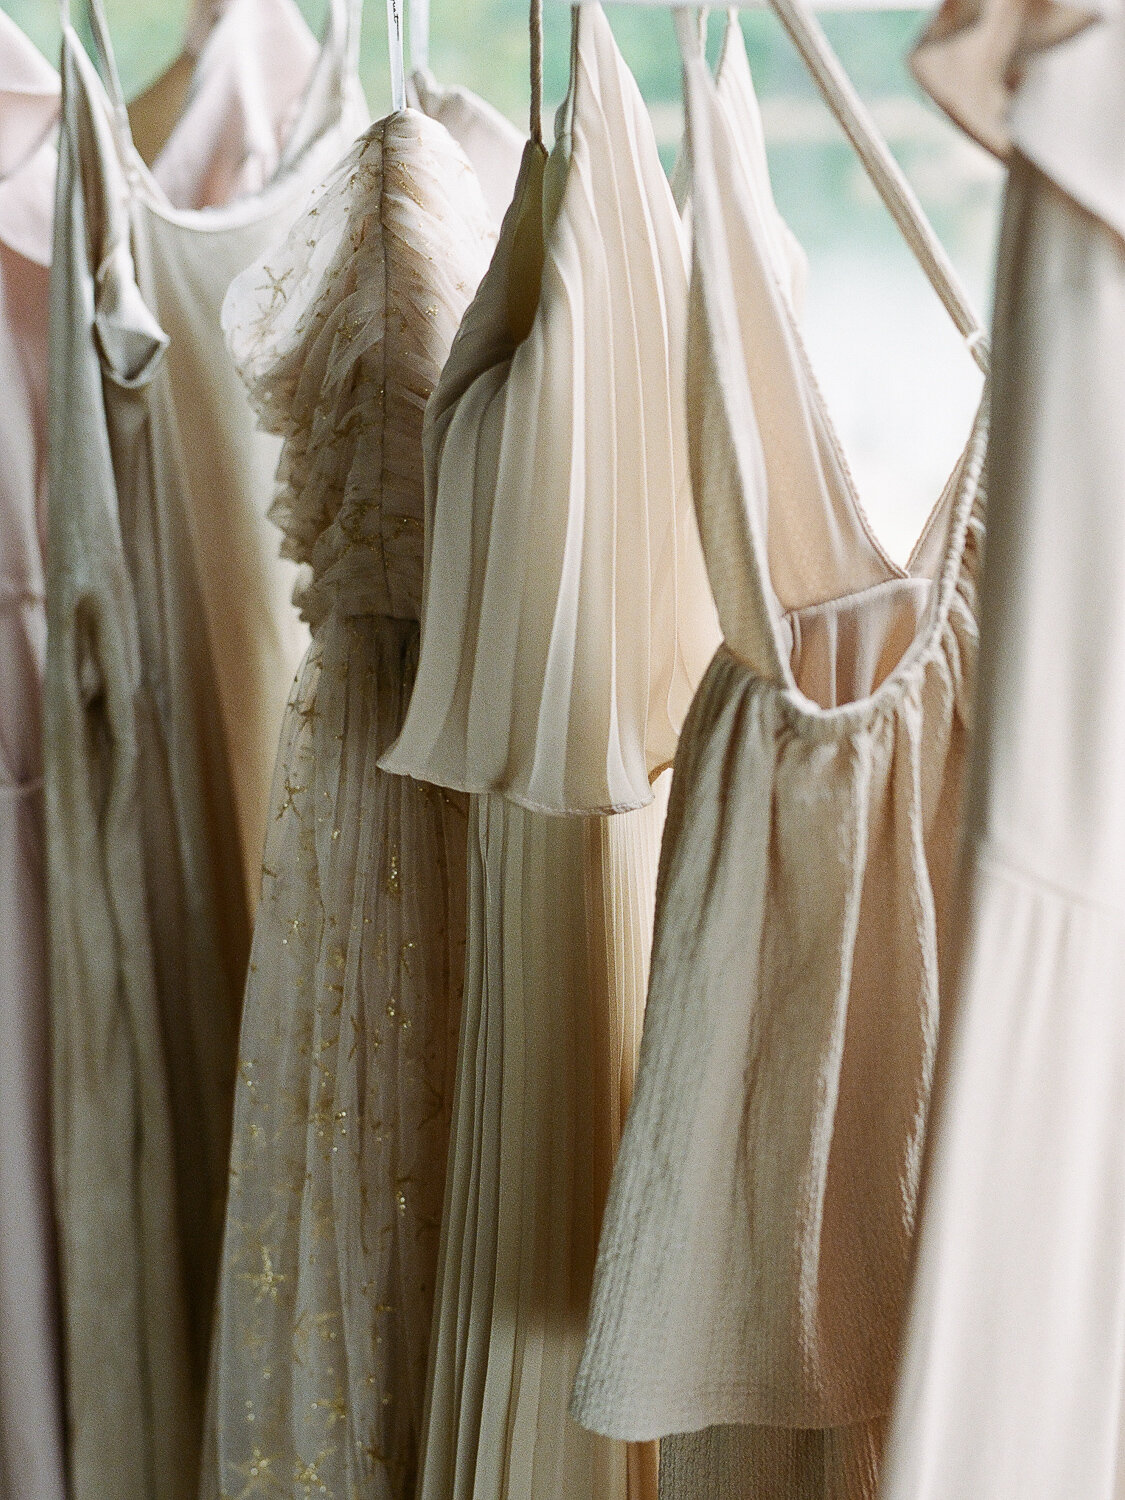 bridesmaid dresses close up